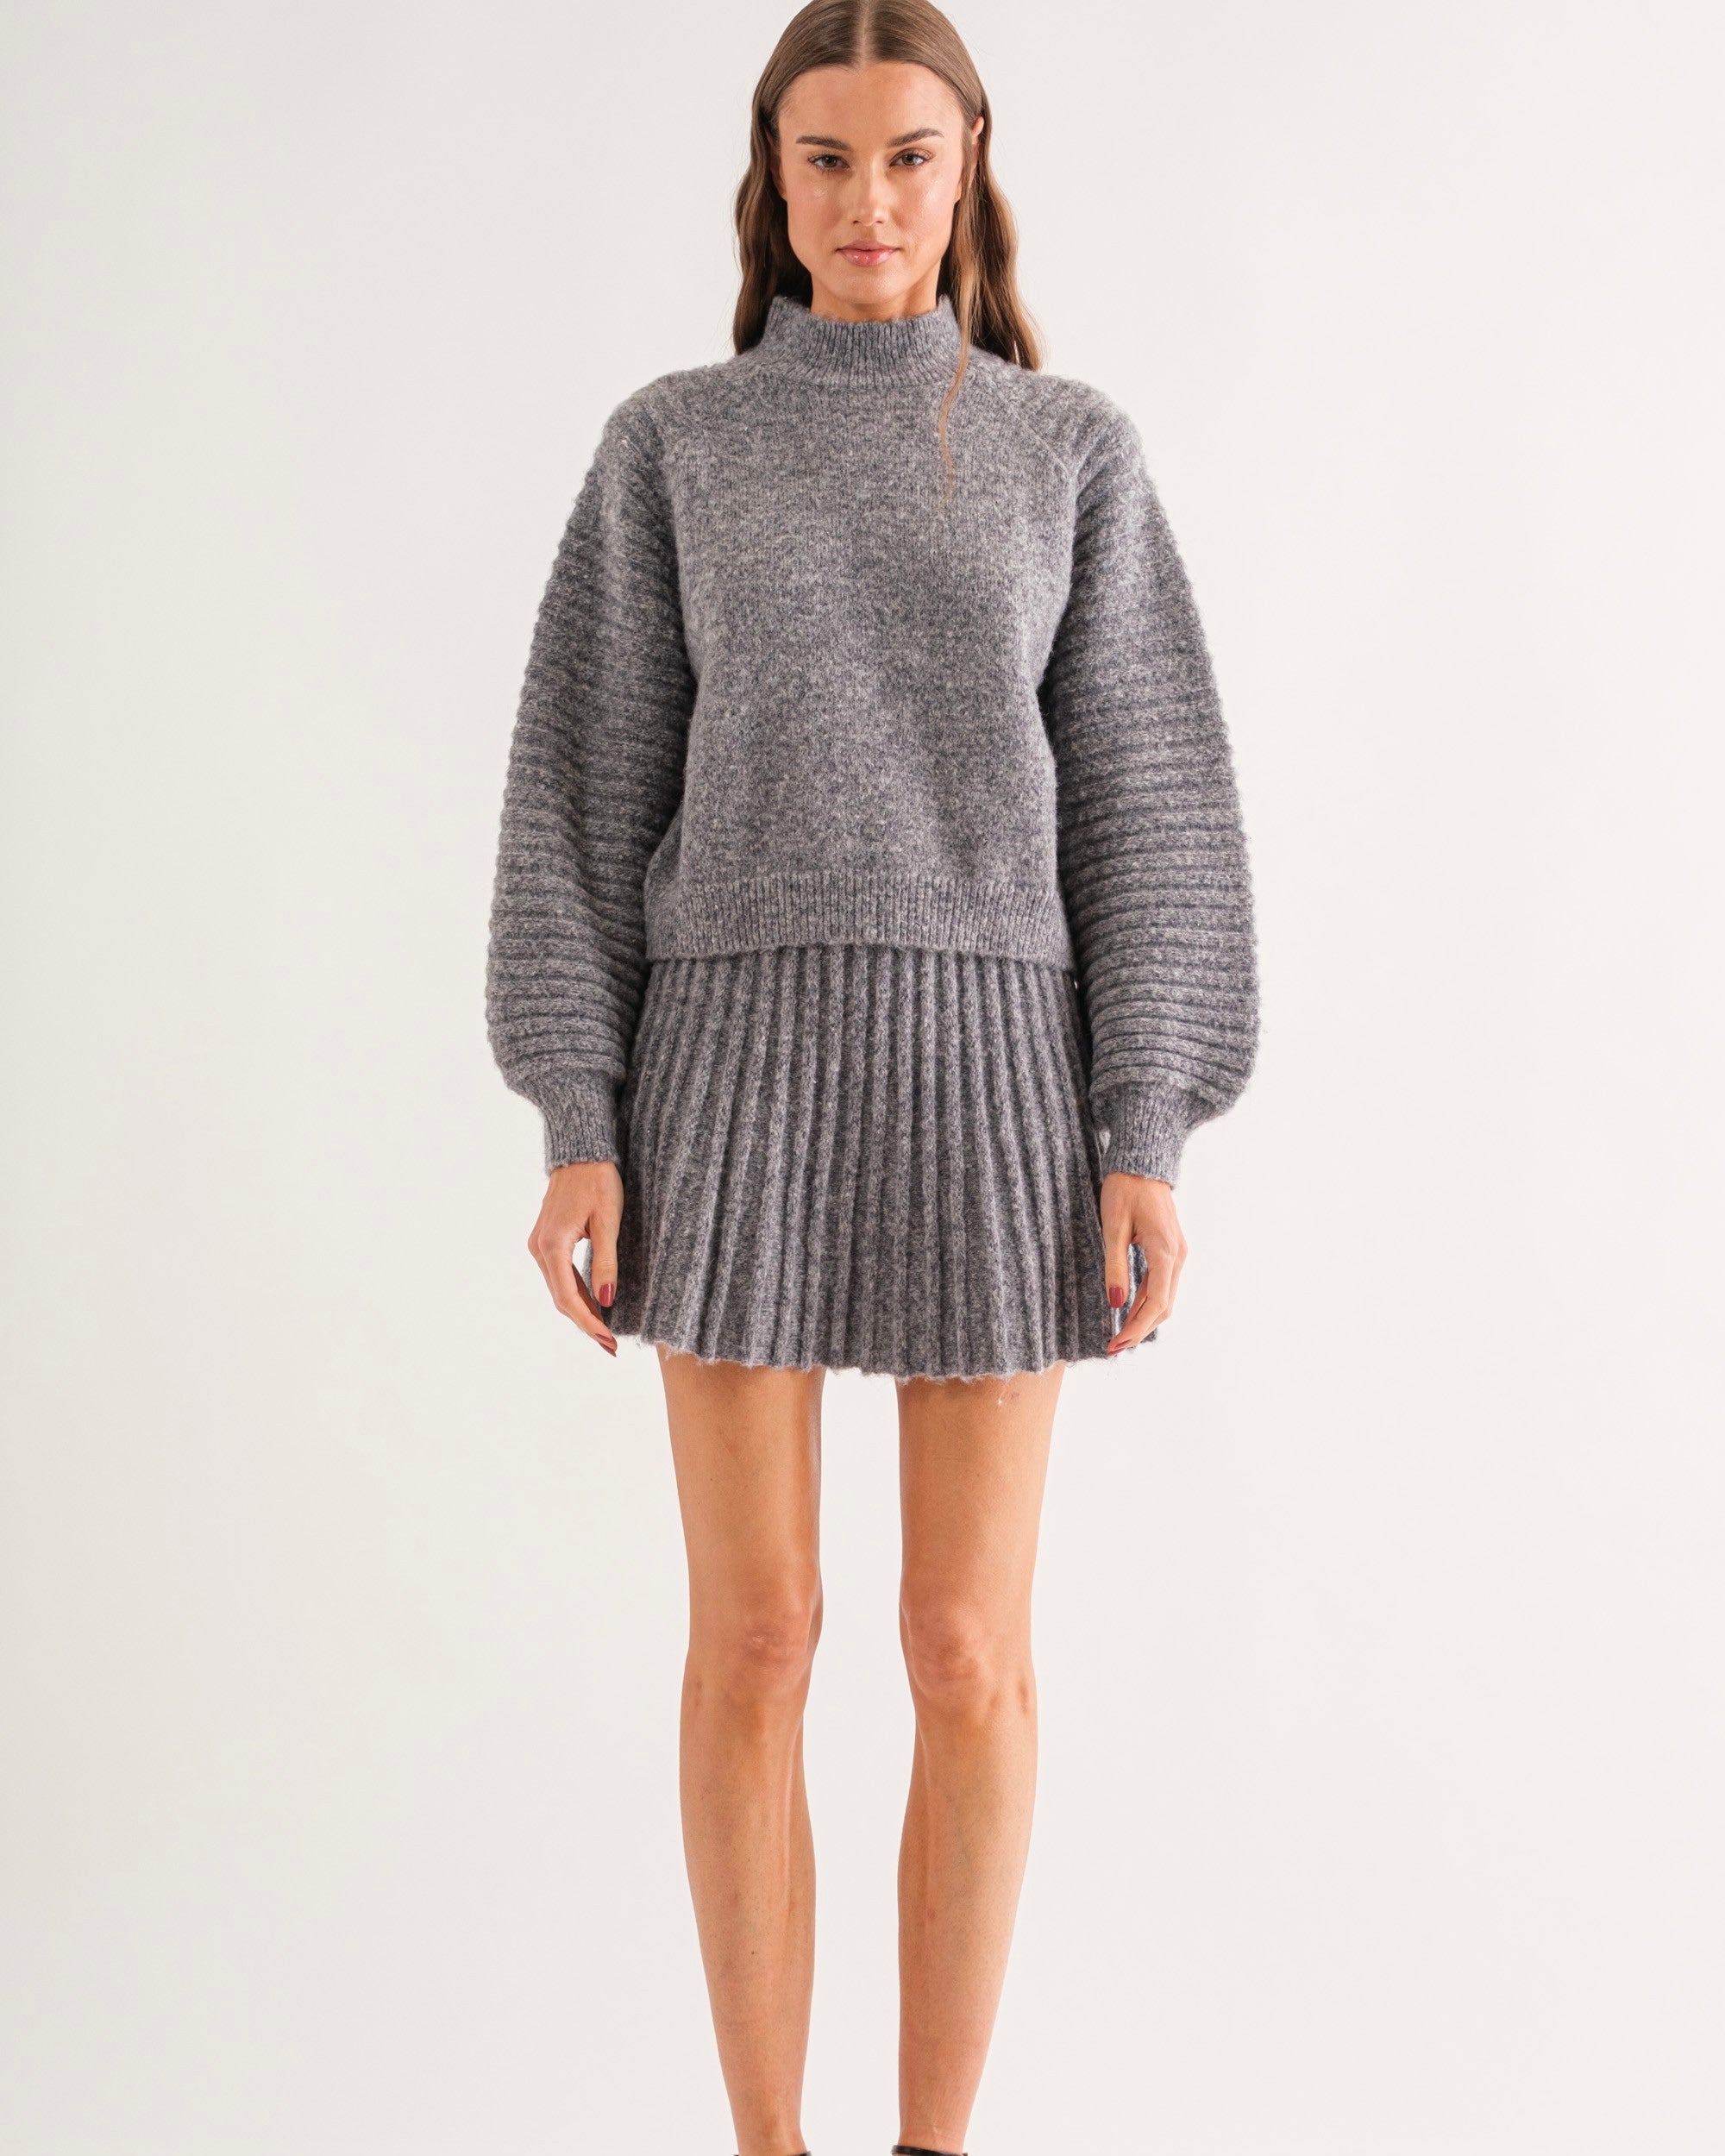 Heather Gray Sweater